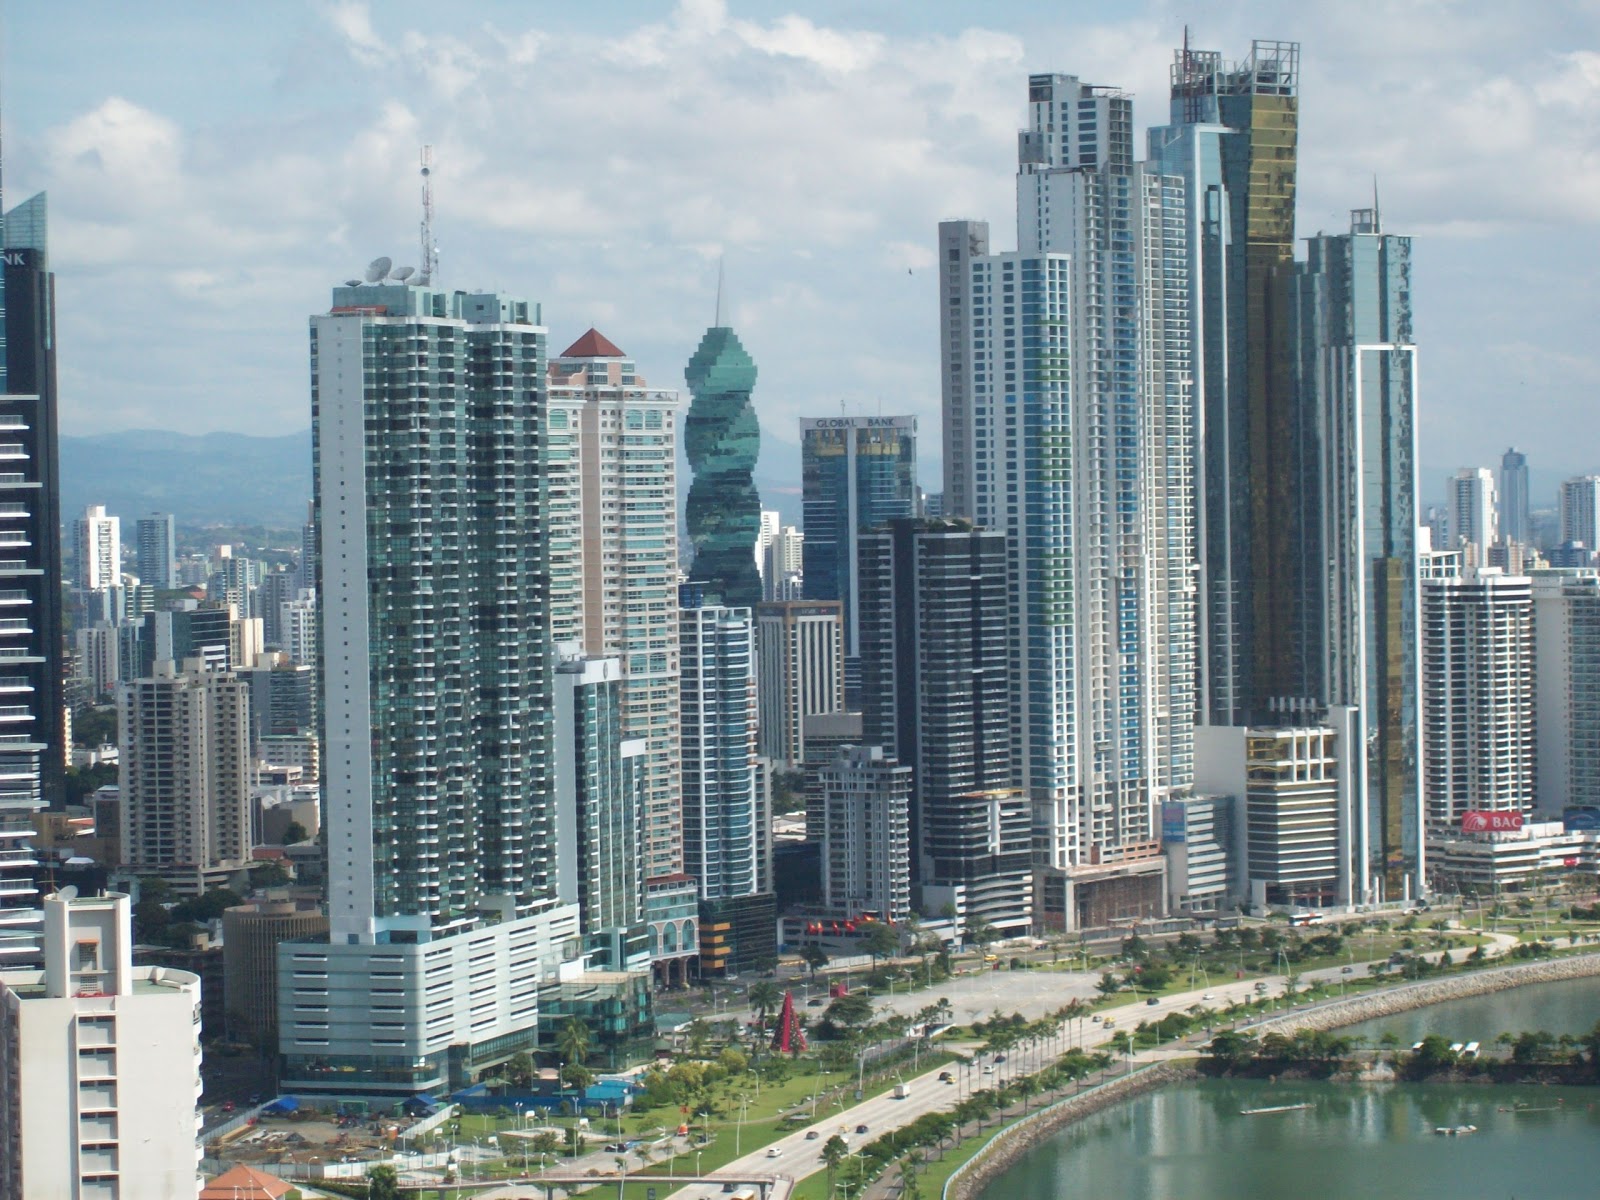 Panama Laws and Advice: Panama City, Panama 2012